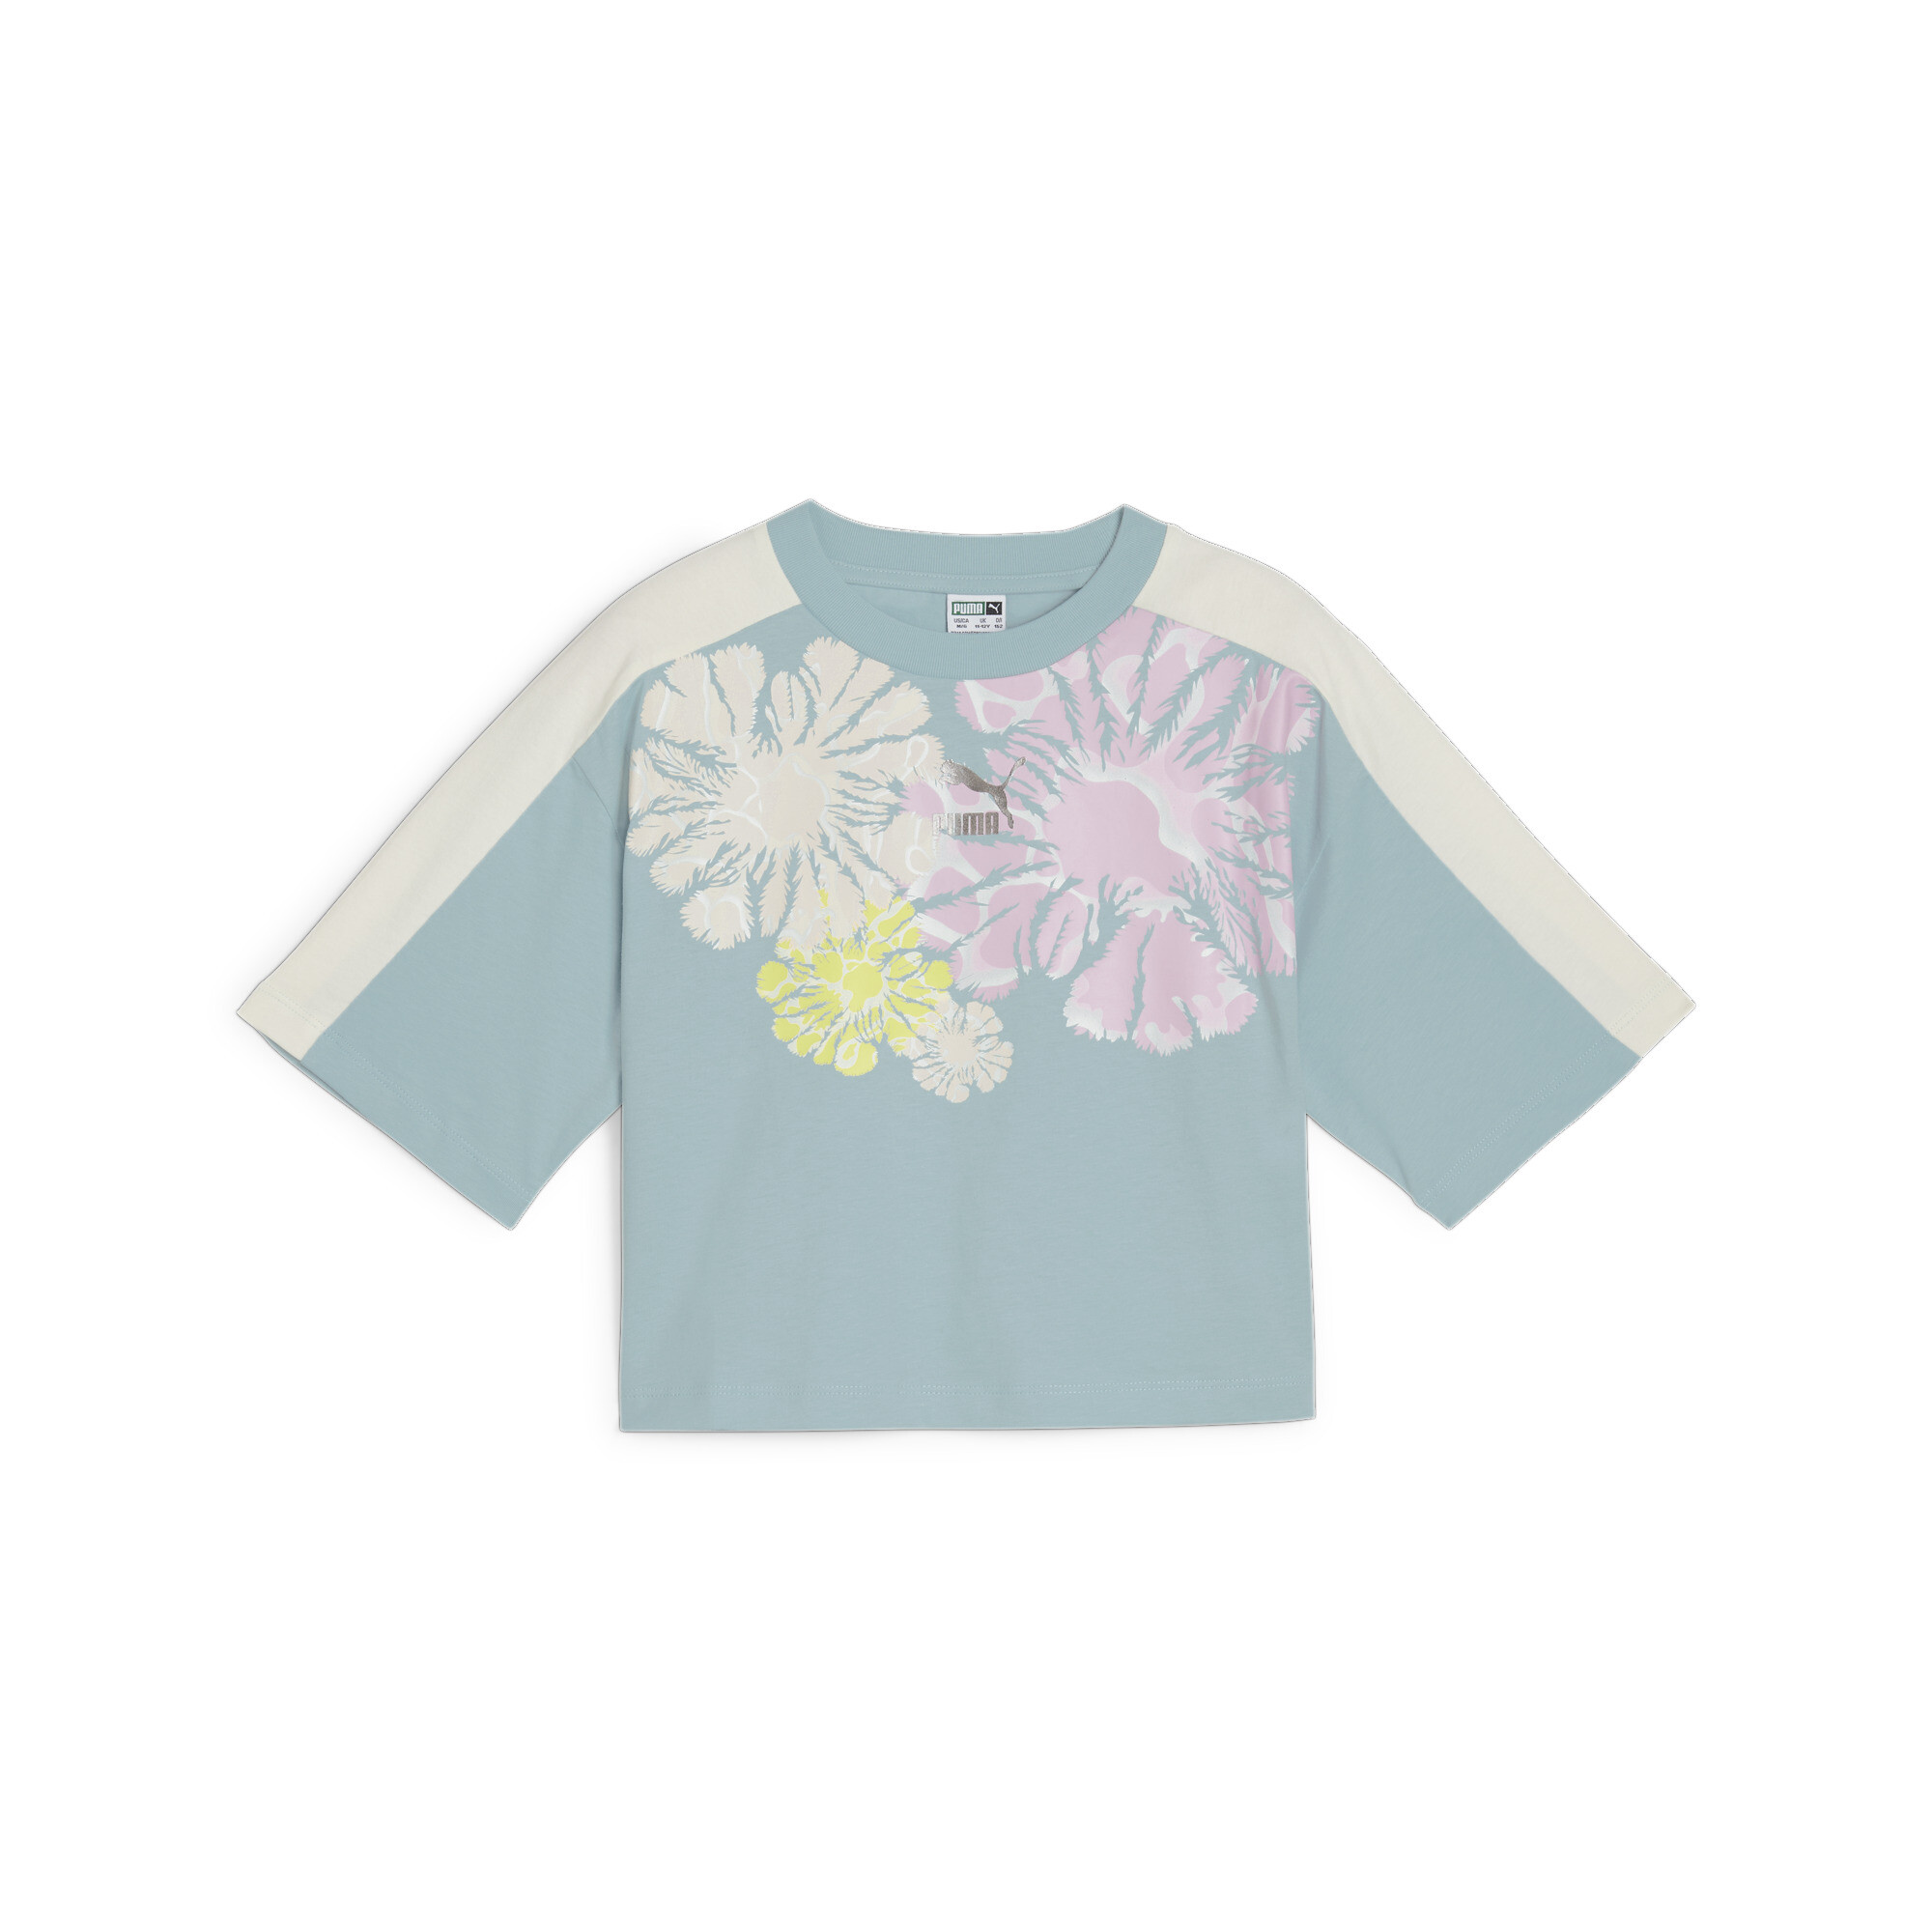 Puma T7 SNFLR Girls' Graphic T-Shirt, Blue, Size 7-8Y, Age